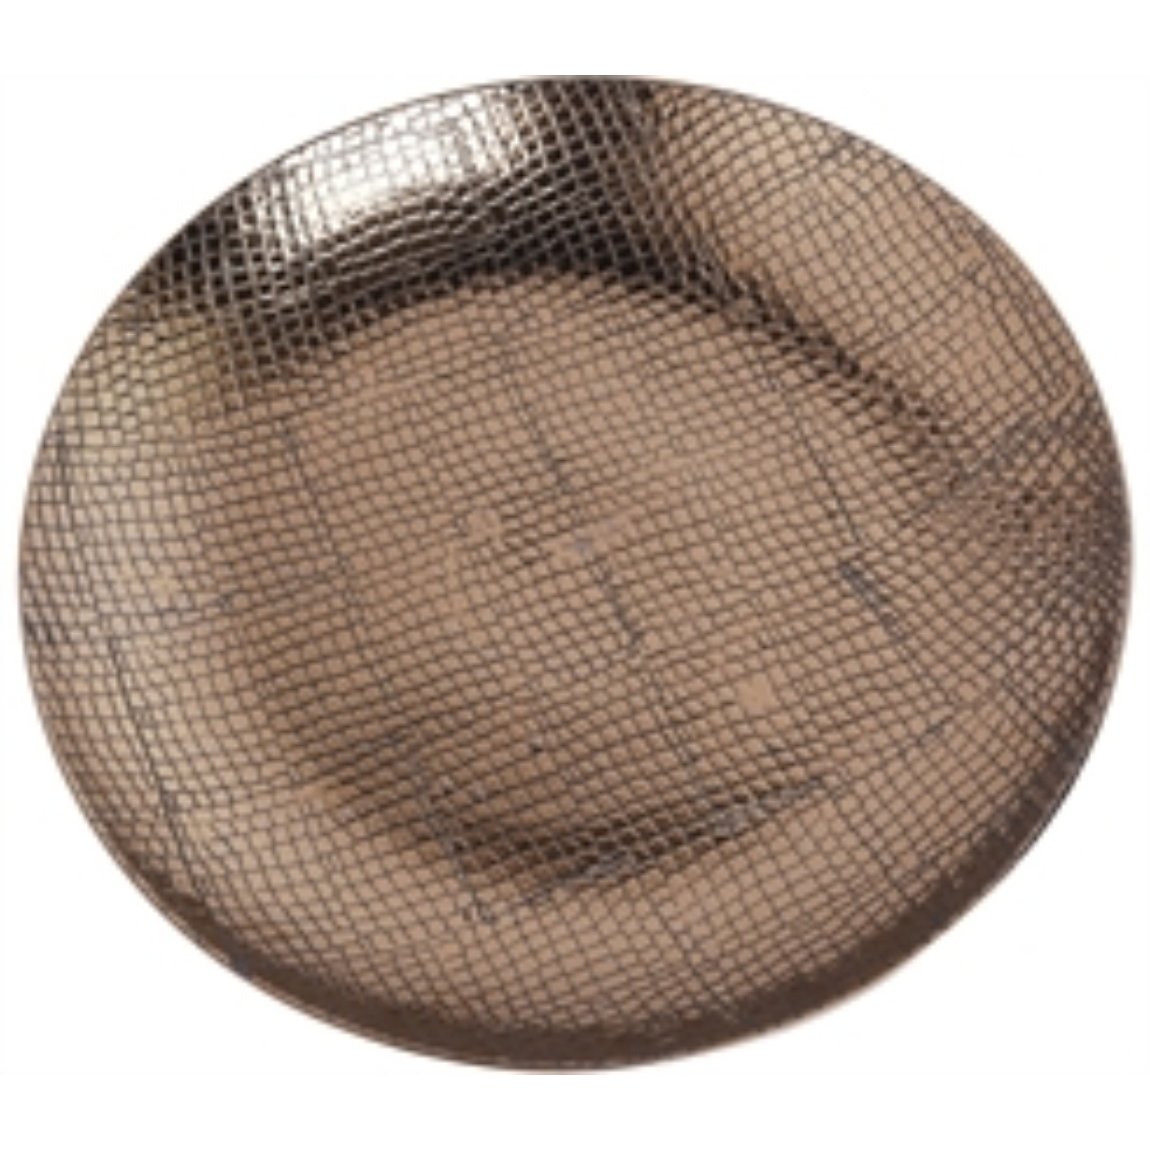 Ceramic Reptile Textured Decorative Plate, Brown- Saltoro Sherpi